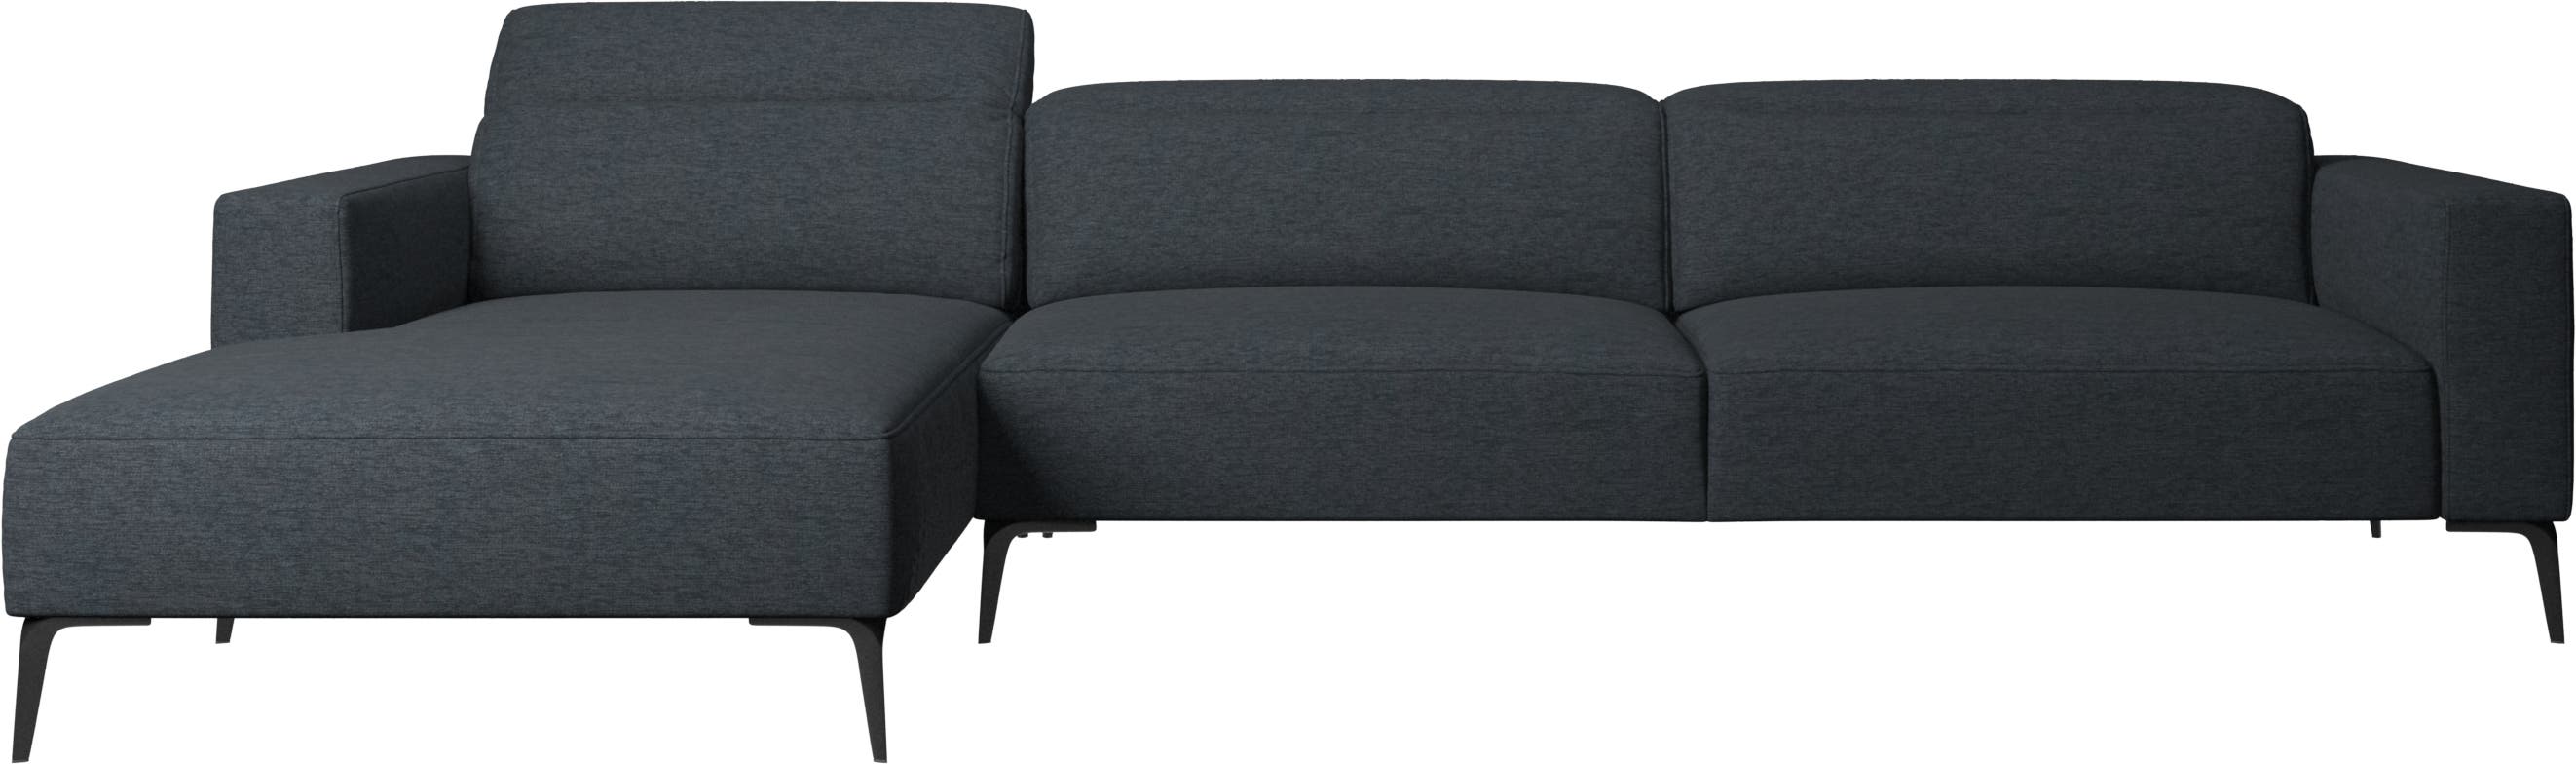 Zürich sofa with resting unit